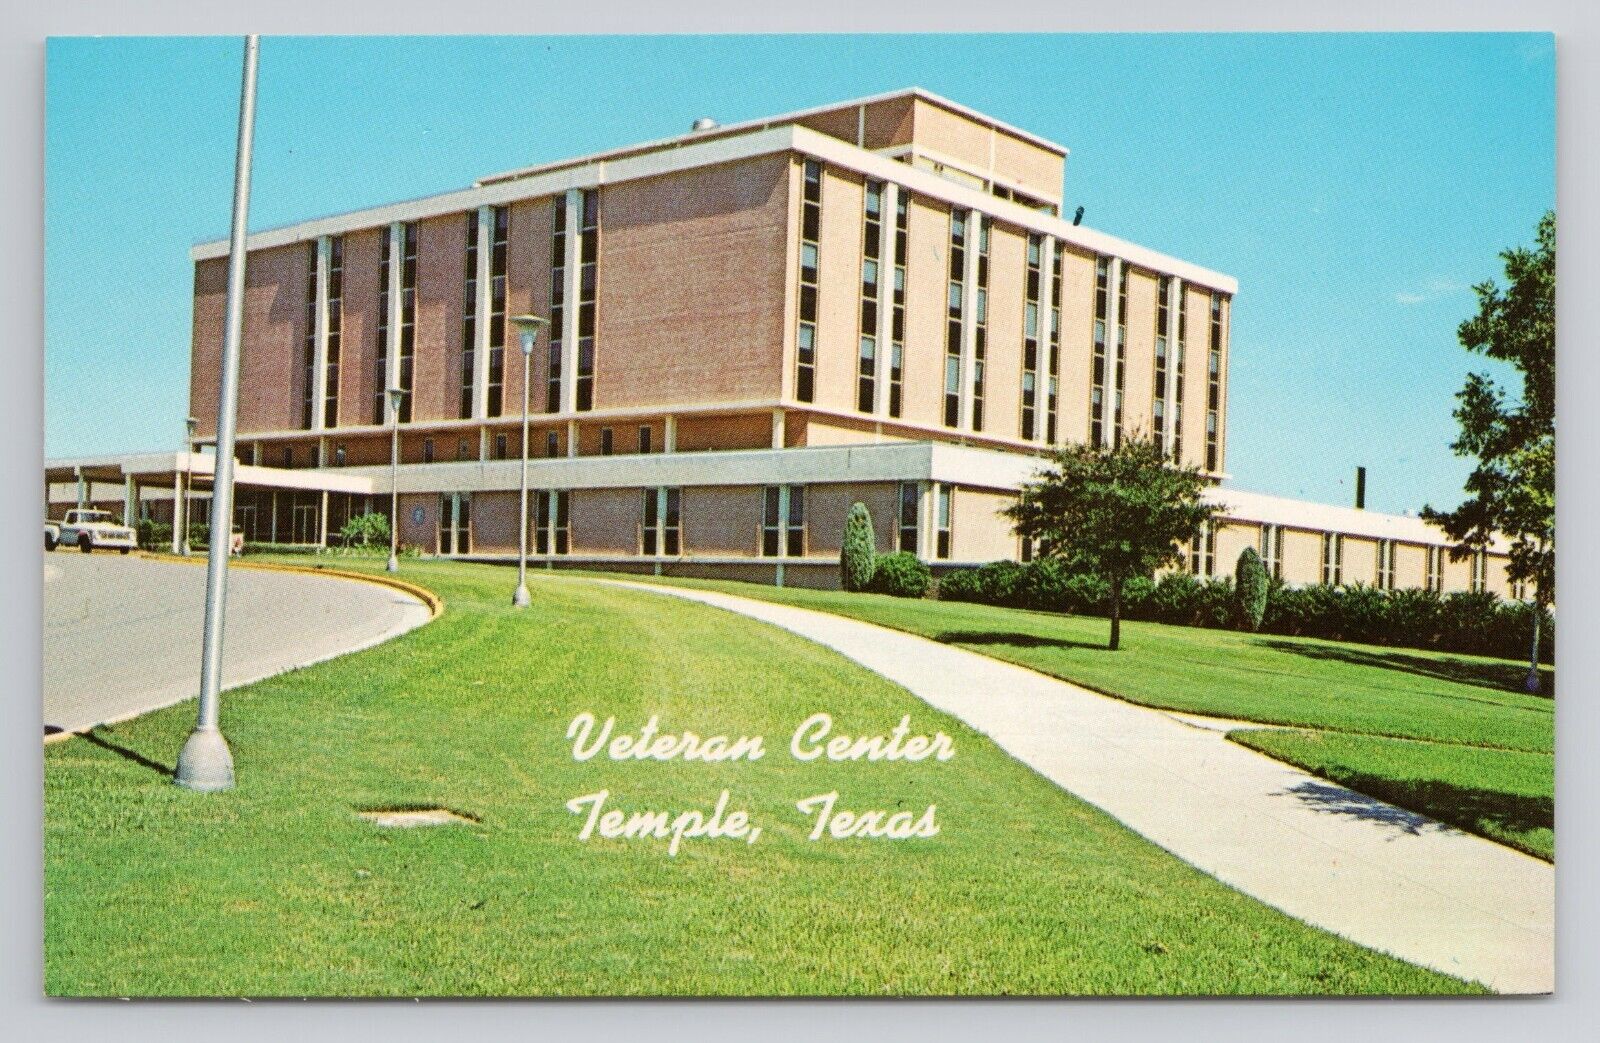 Veteran Center Temple, Texas Chrome Postcard 1115